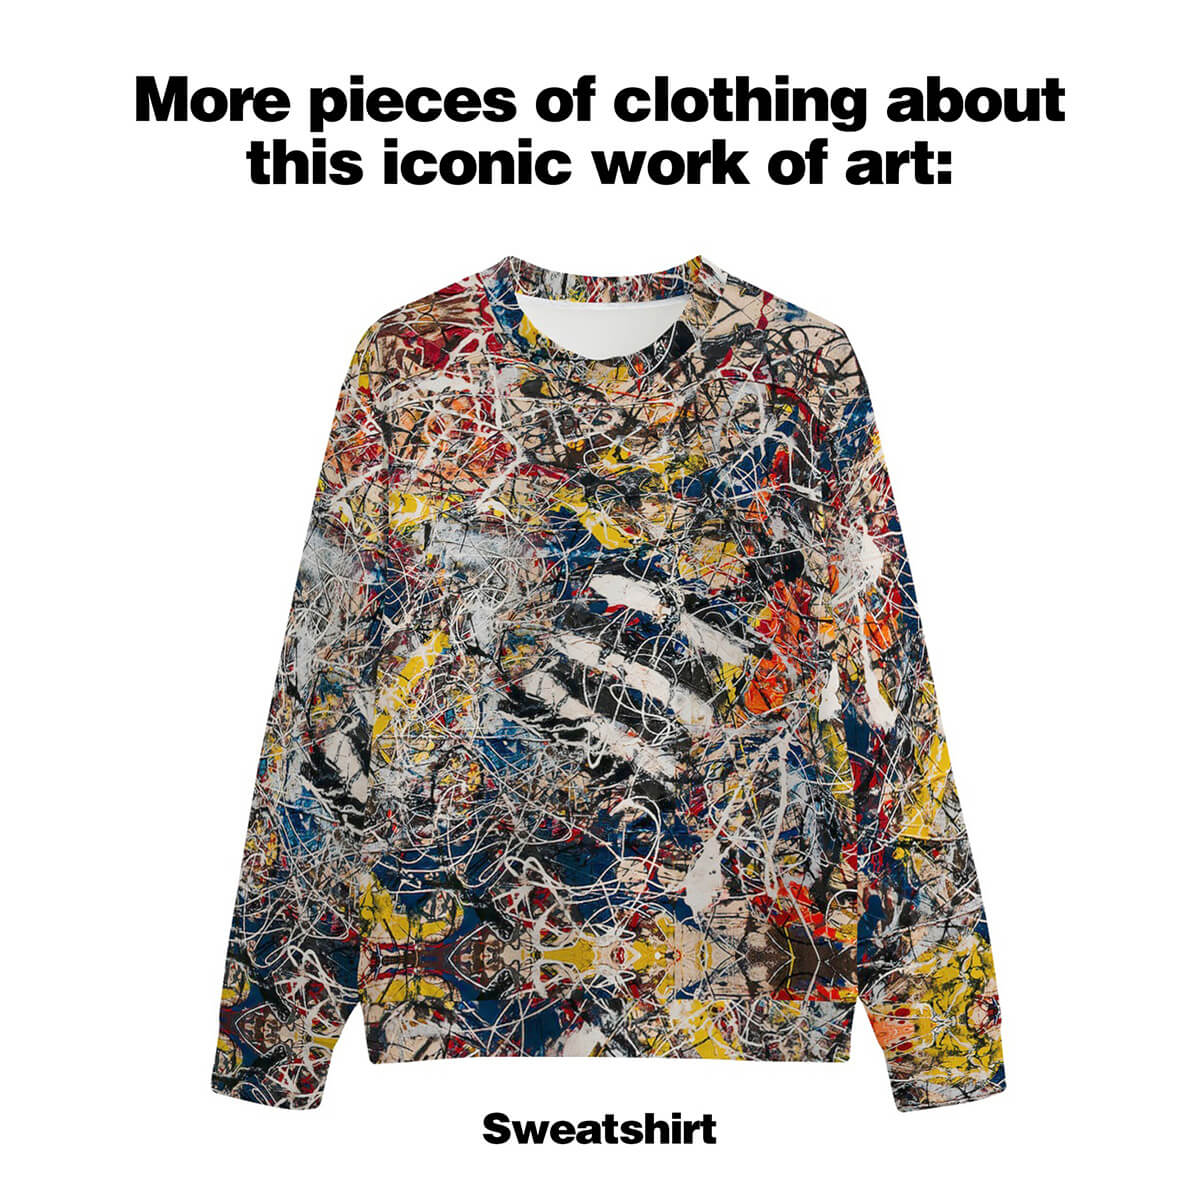 Dámské sako číslo 17A od Jacksona Pollocka Art